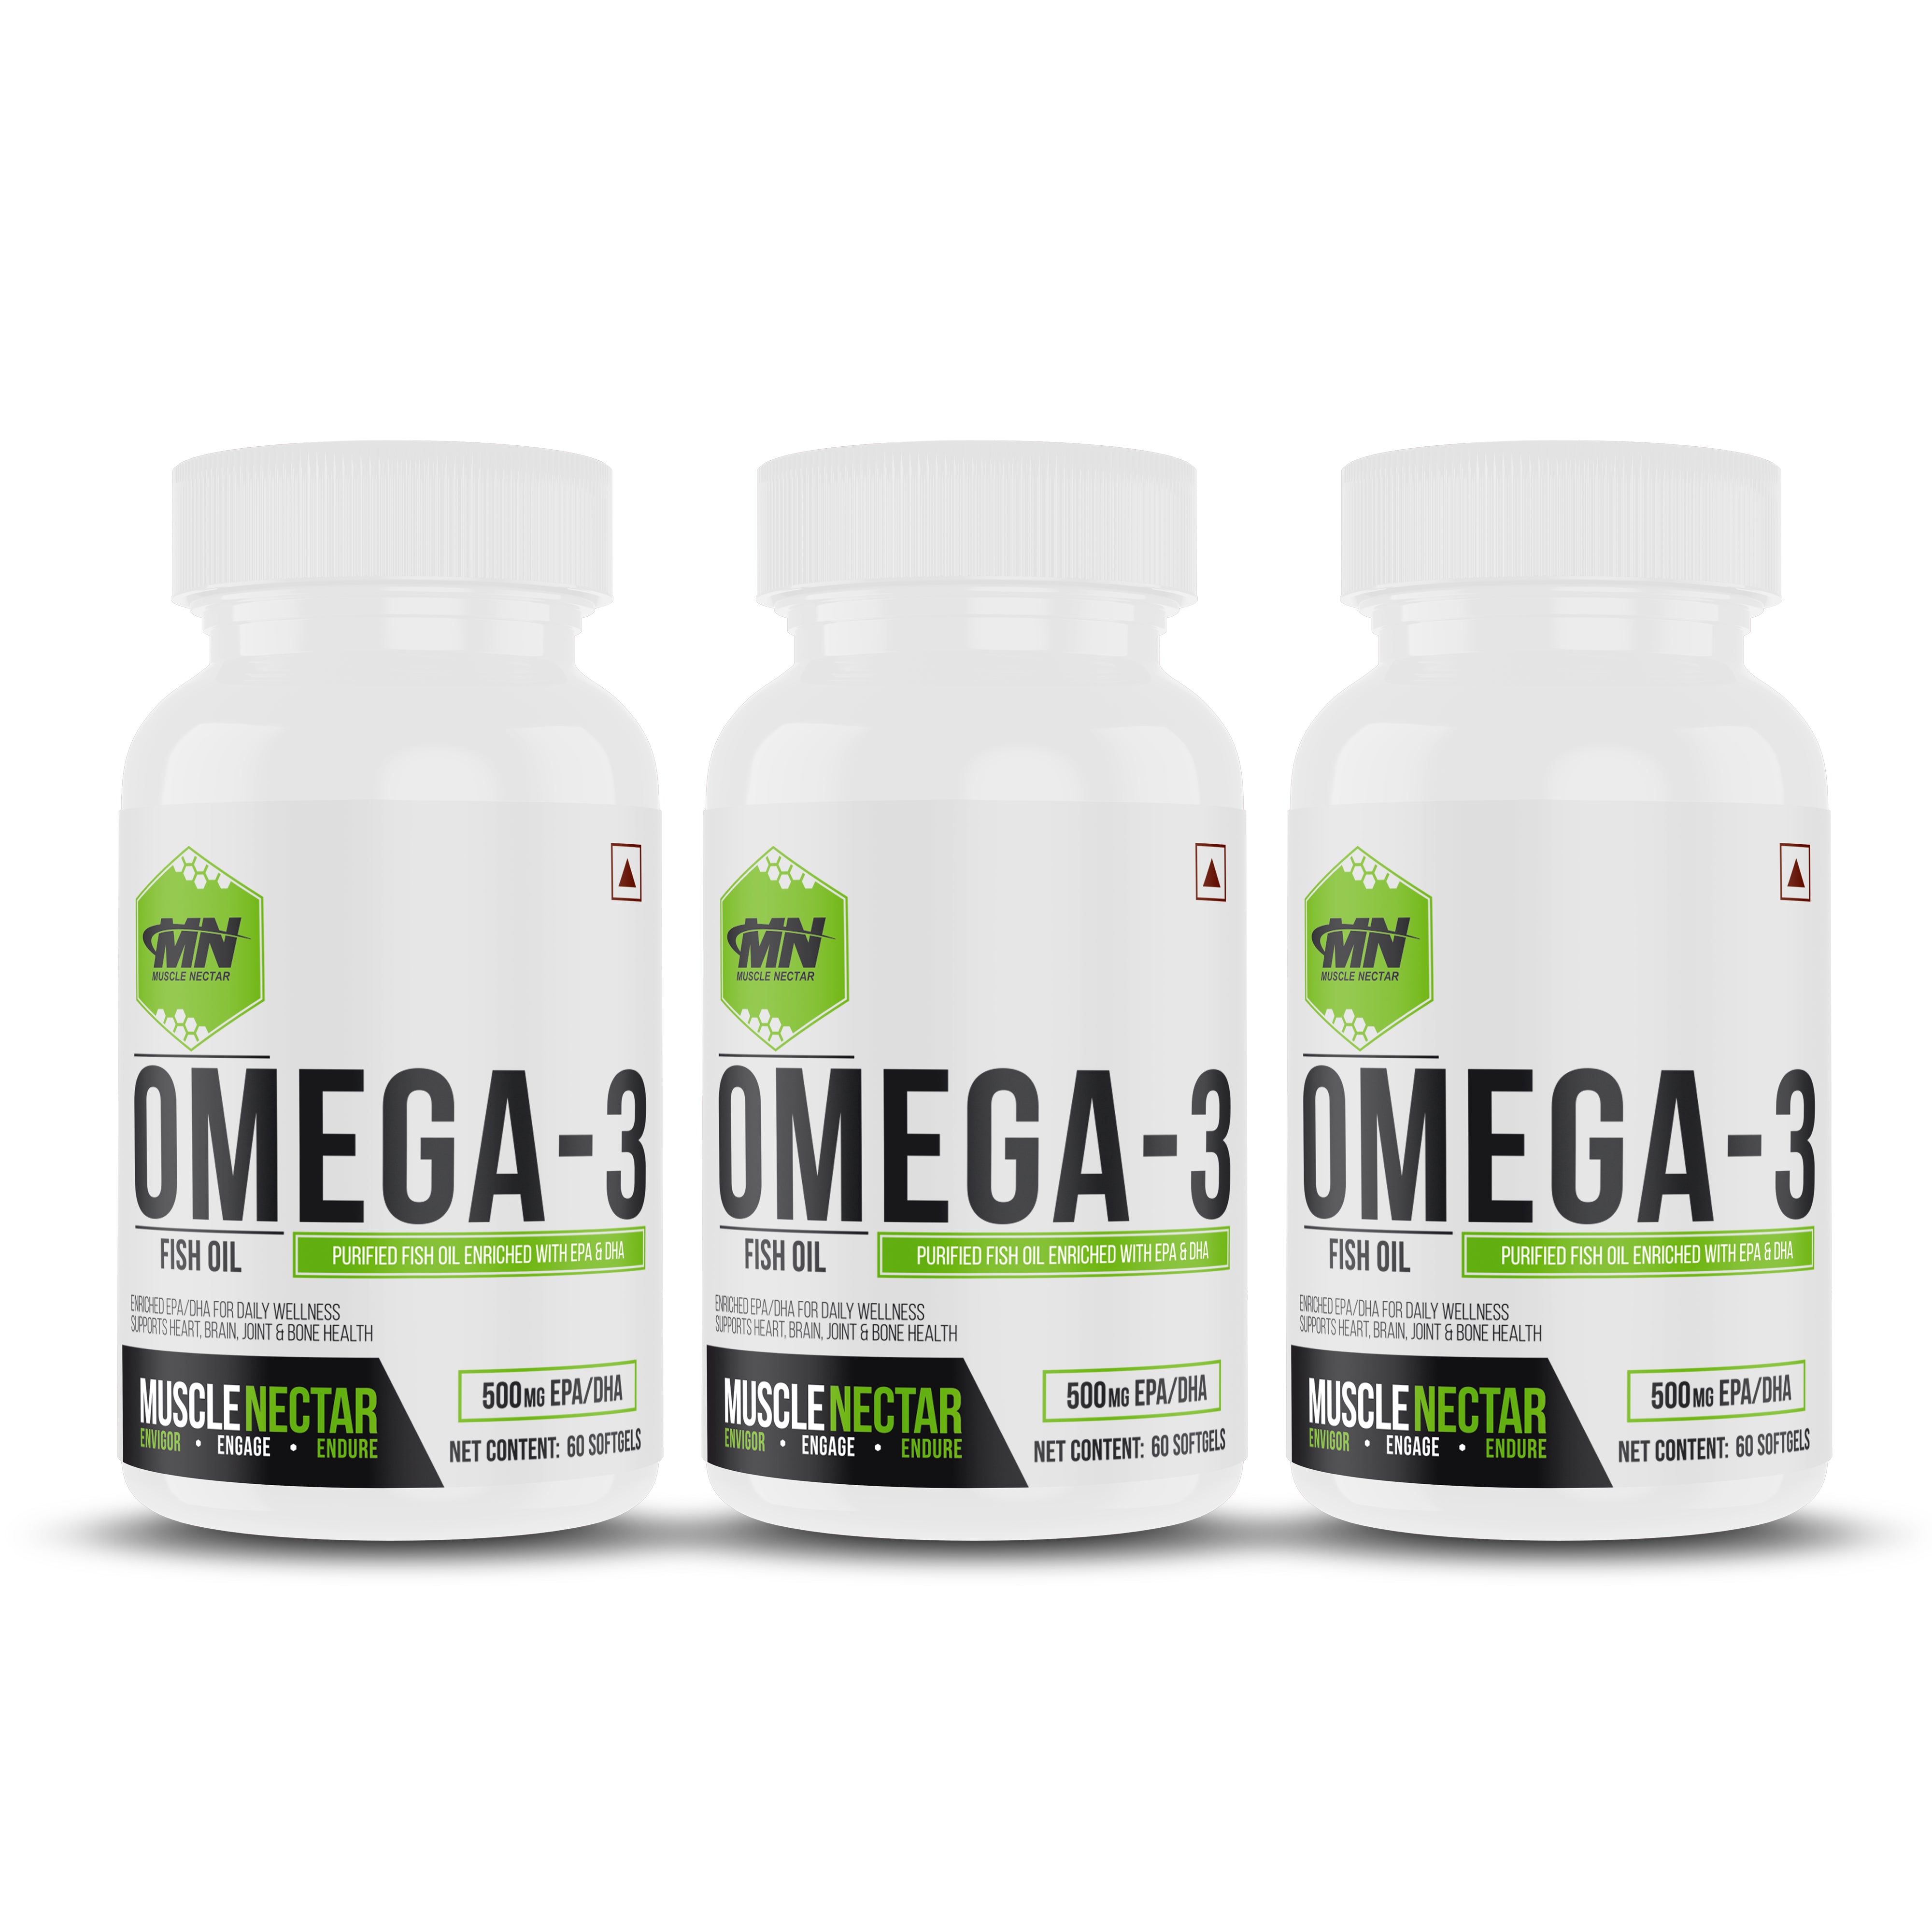 Double Strength Purified Omega 3 Fish Oil 2000mg, 1000mg EPA/DHA